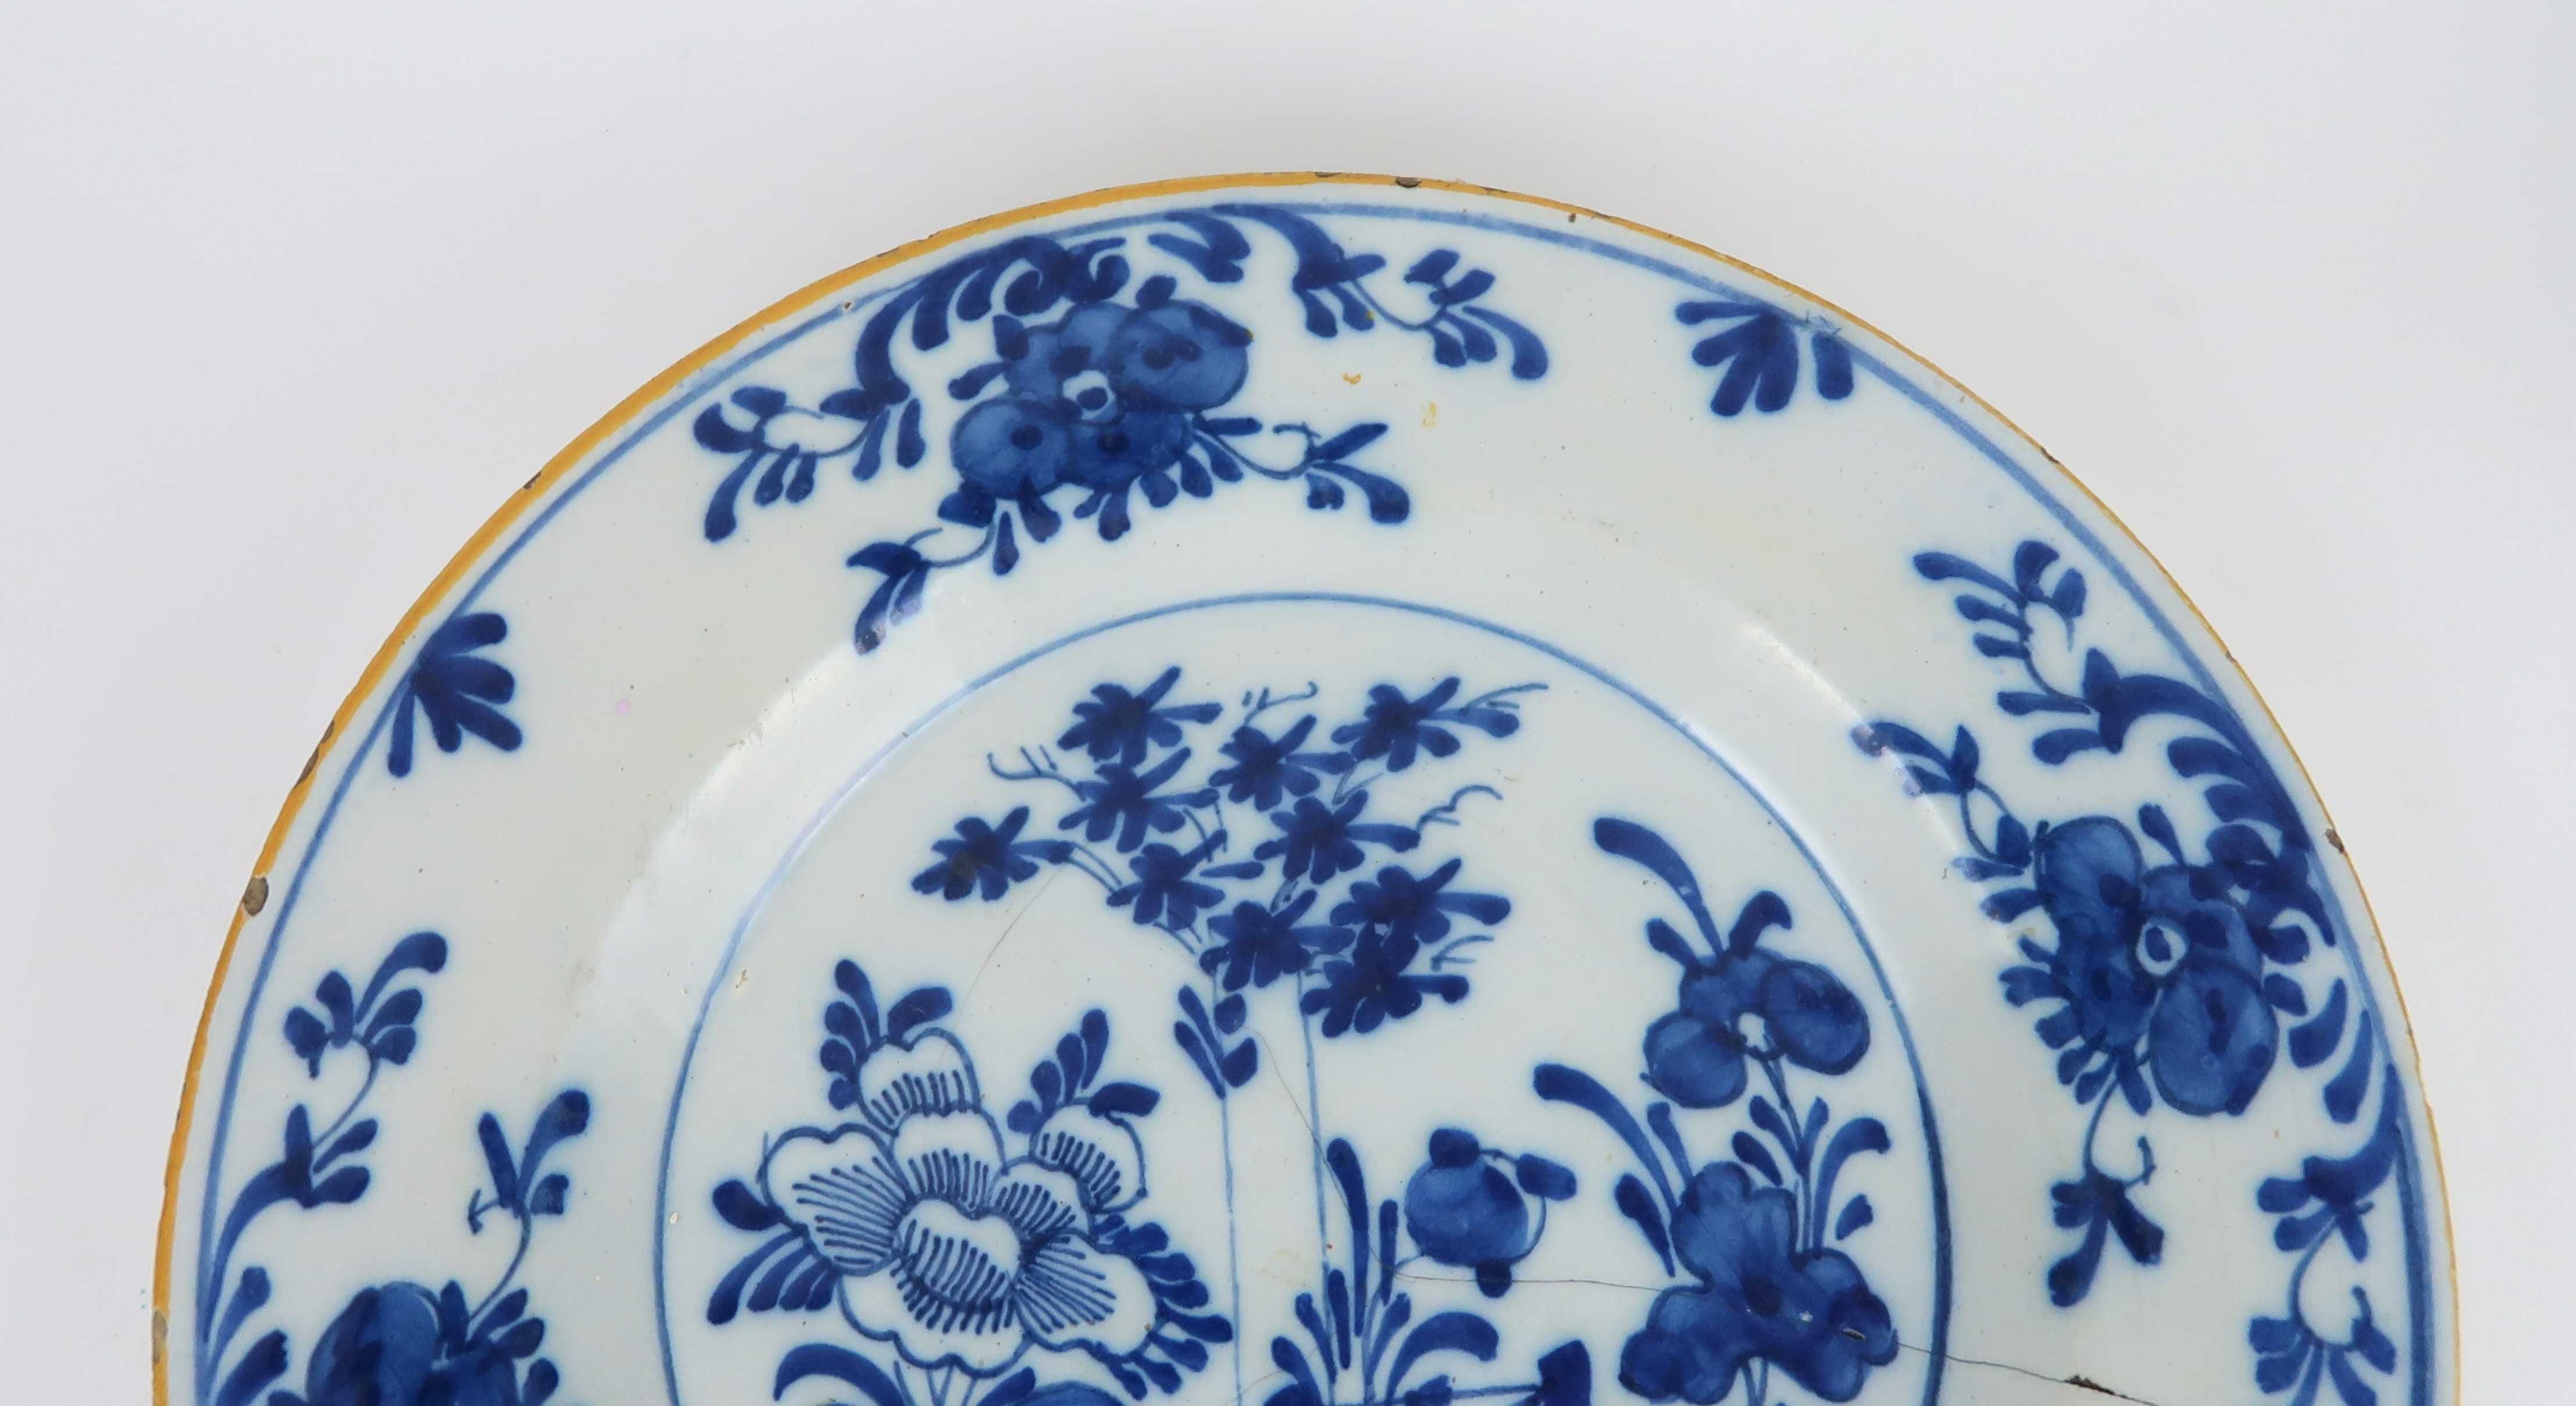 Prato Cerâmica azul e branca Séc. XVII / XVIII (Ref. 2)